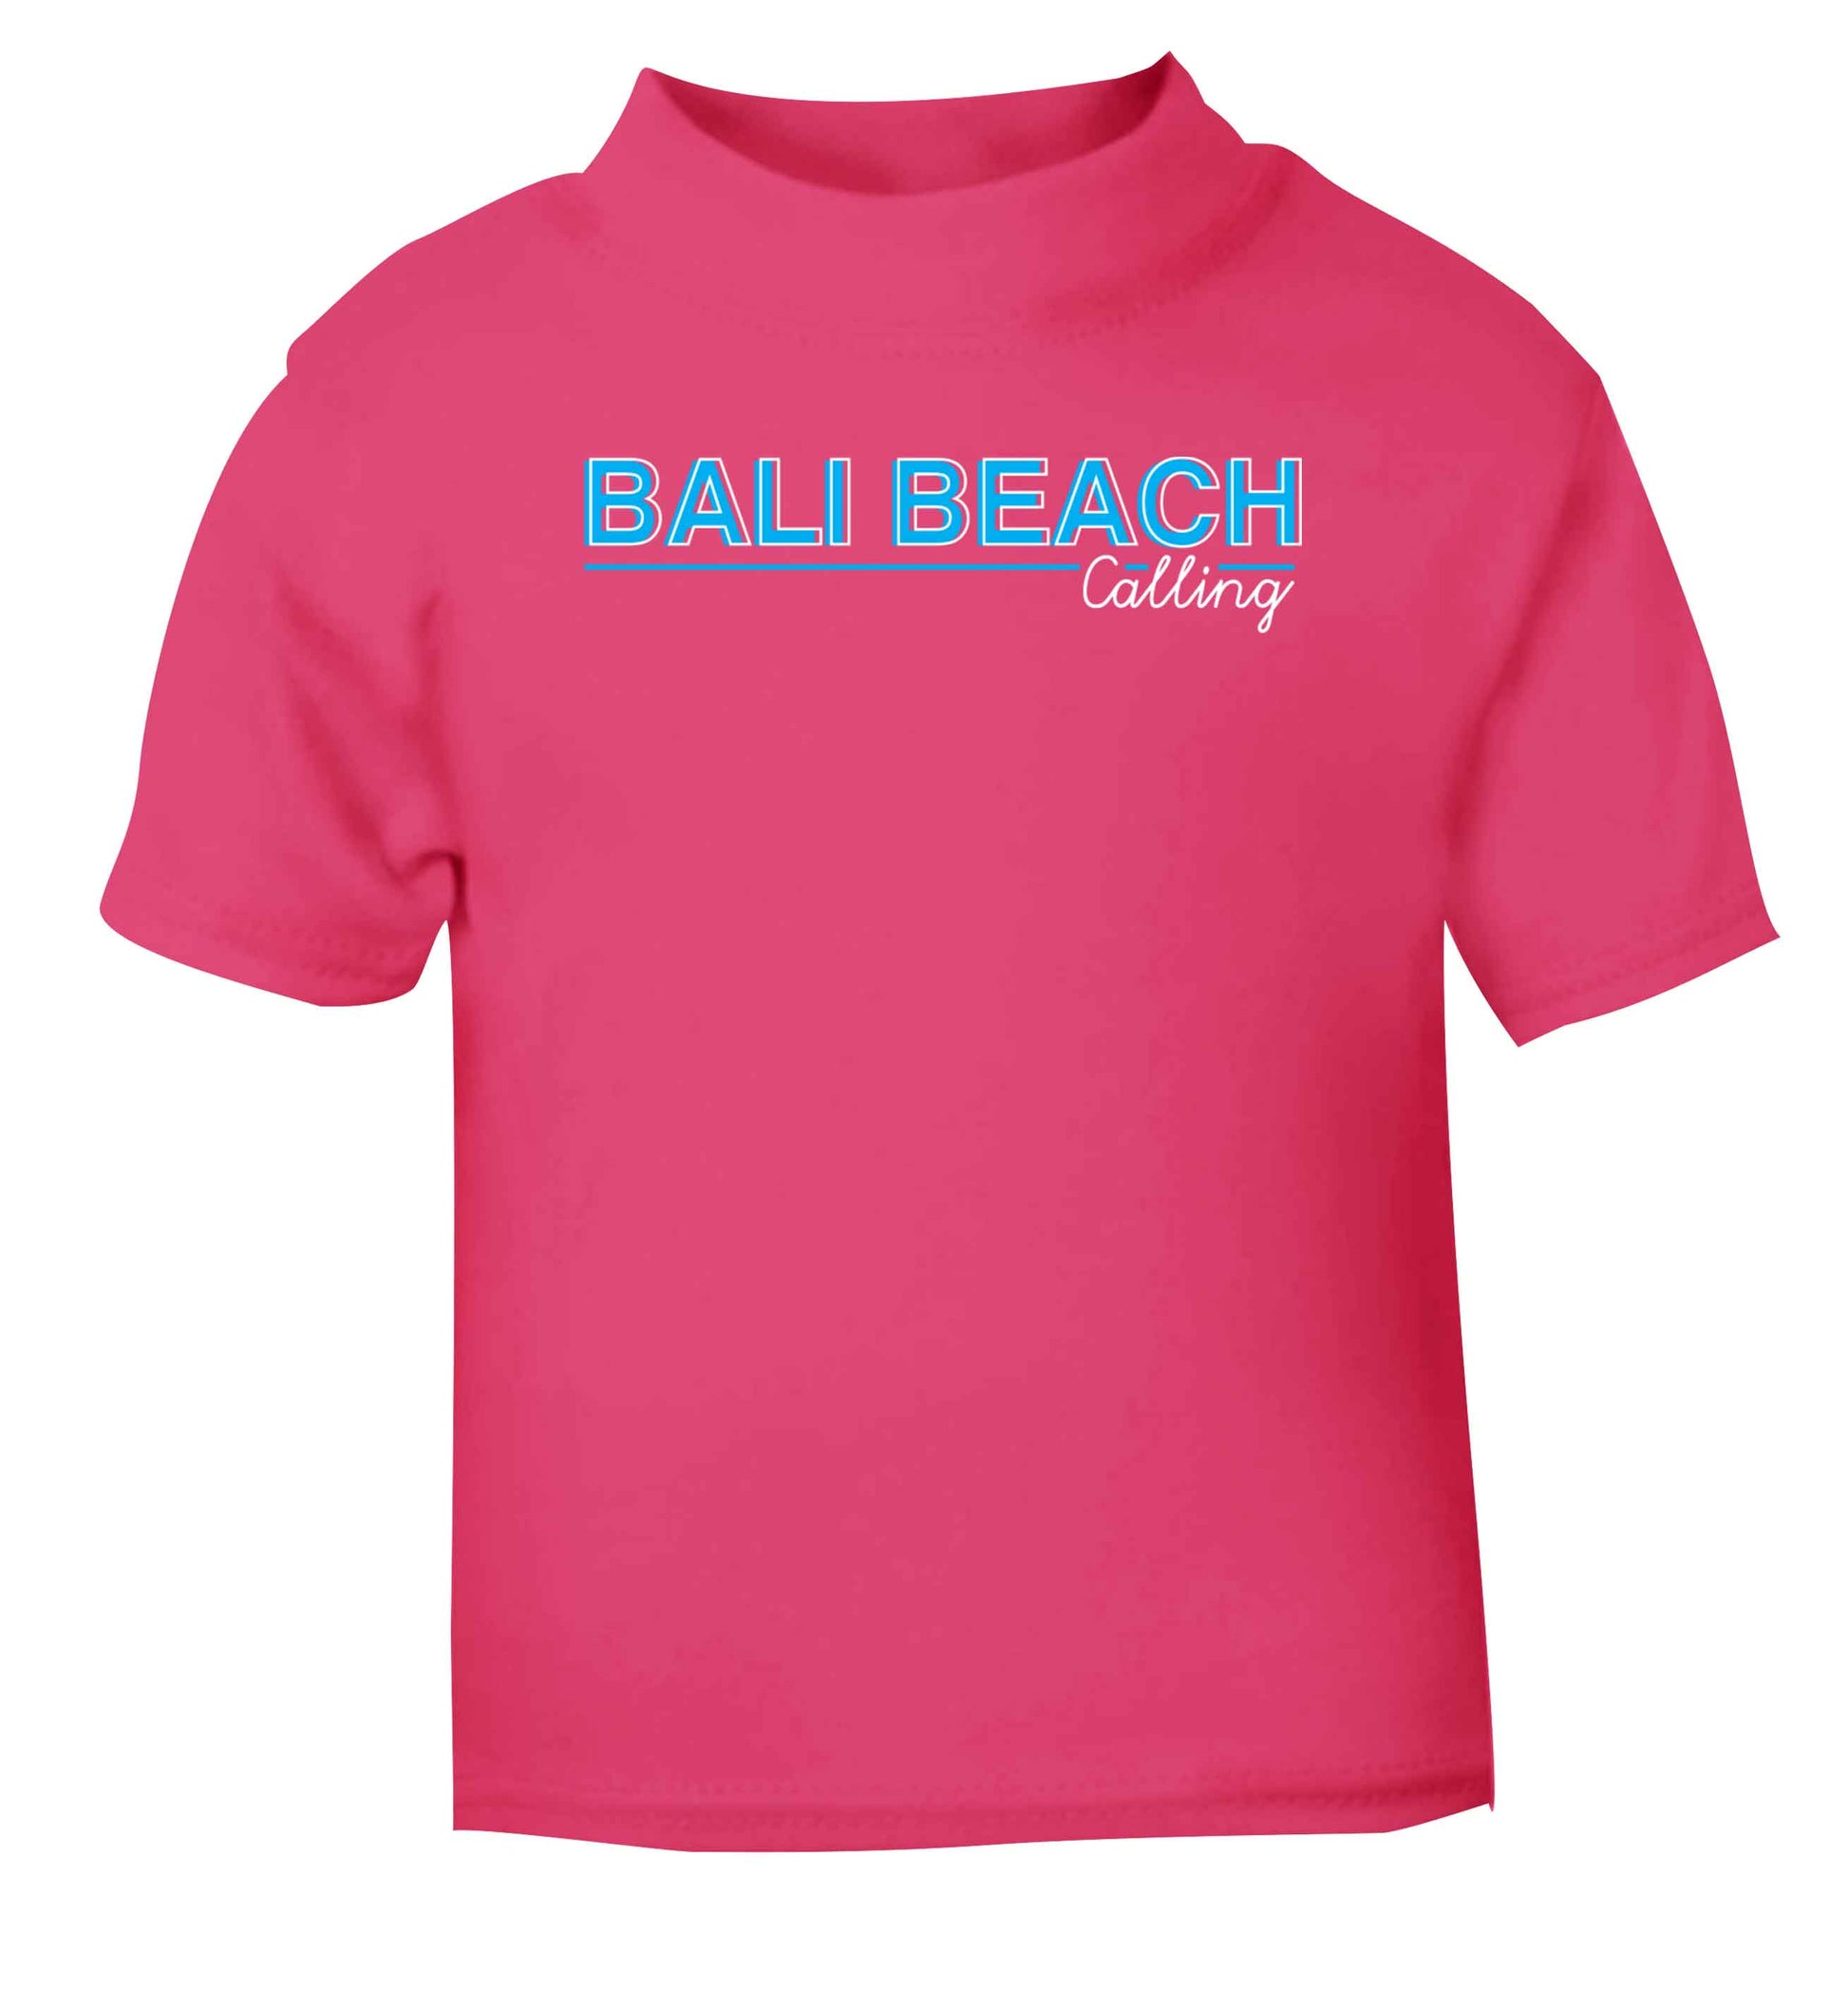 Bali beach calling pink Baby Toddler Tshirt 2 Years